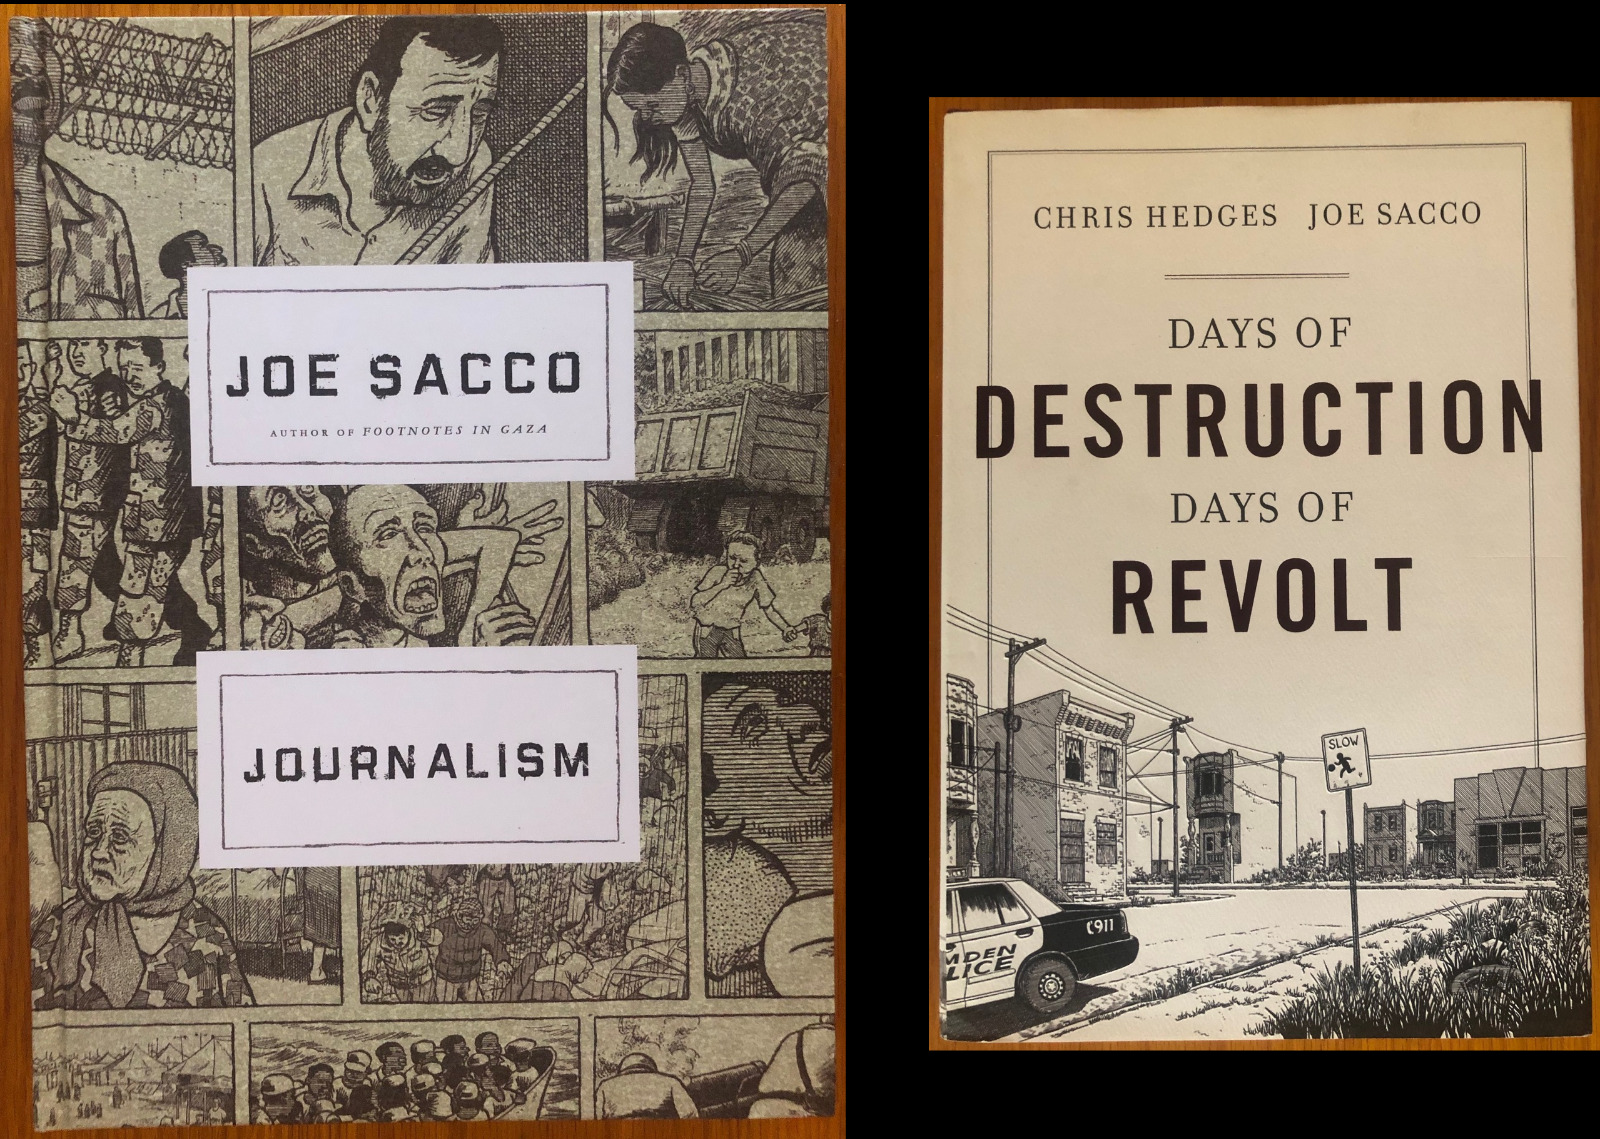 JOURNALISM  +  DAYS OF DESTRUCTION DAYS OF REVOLT (2012)  Joe Sacco  1sts